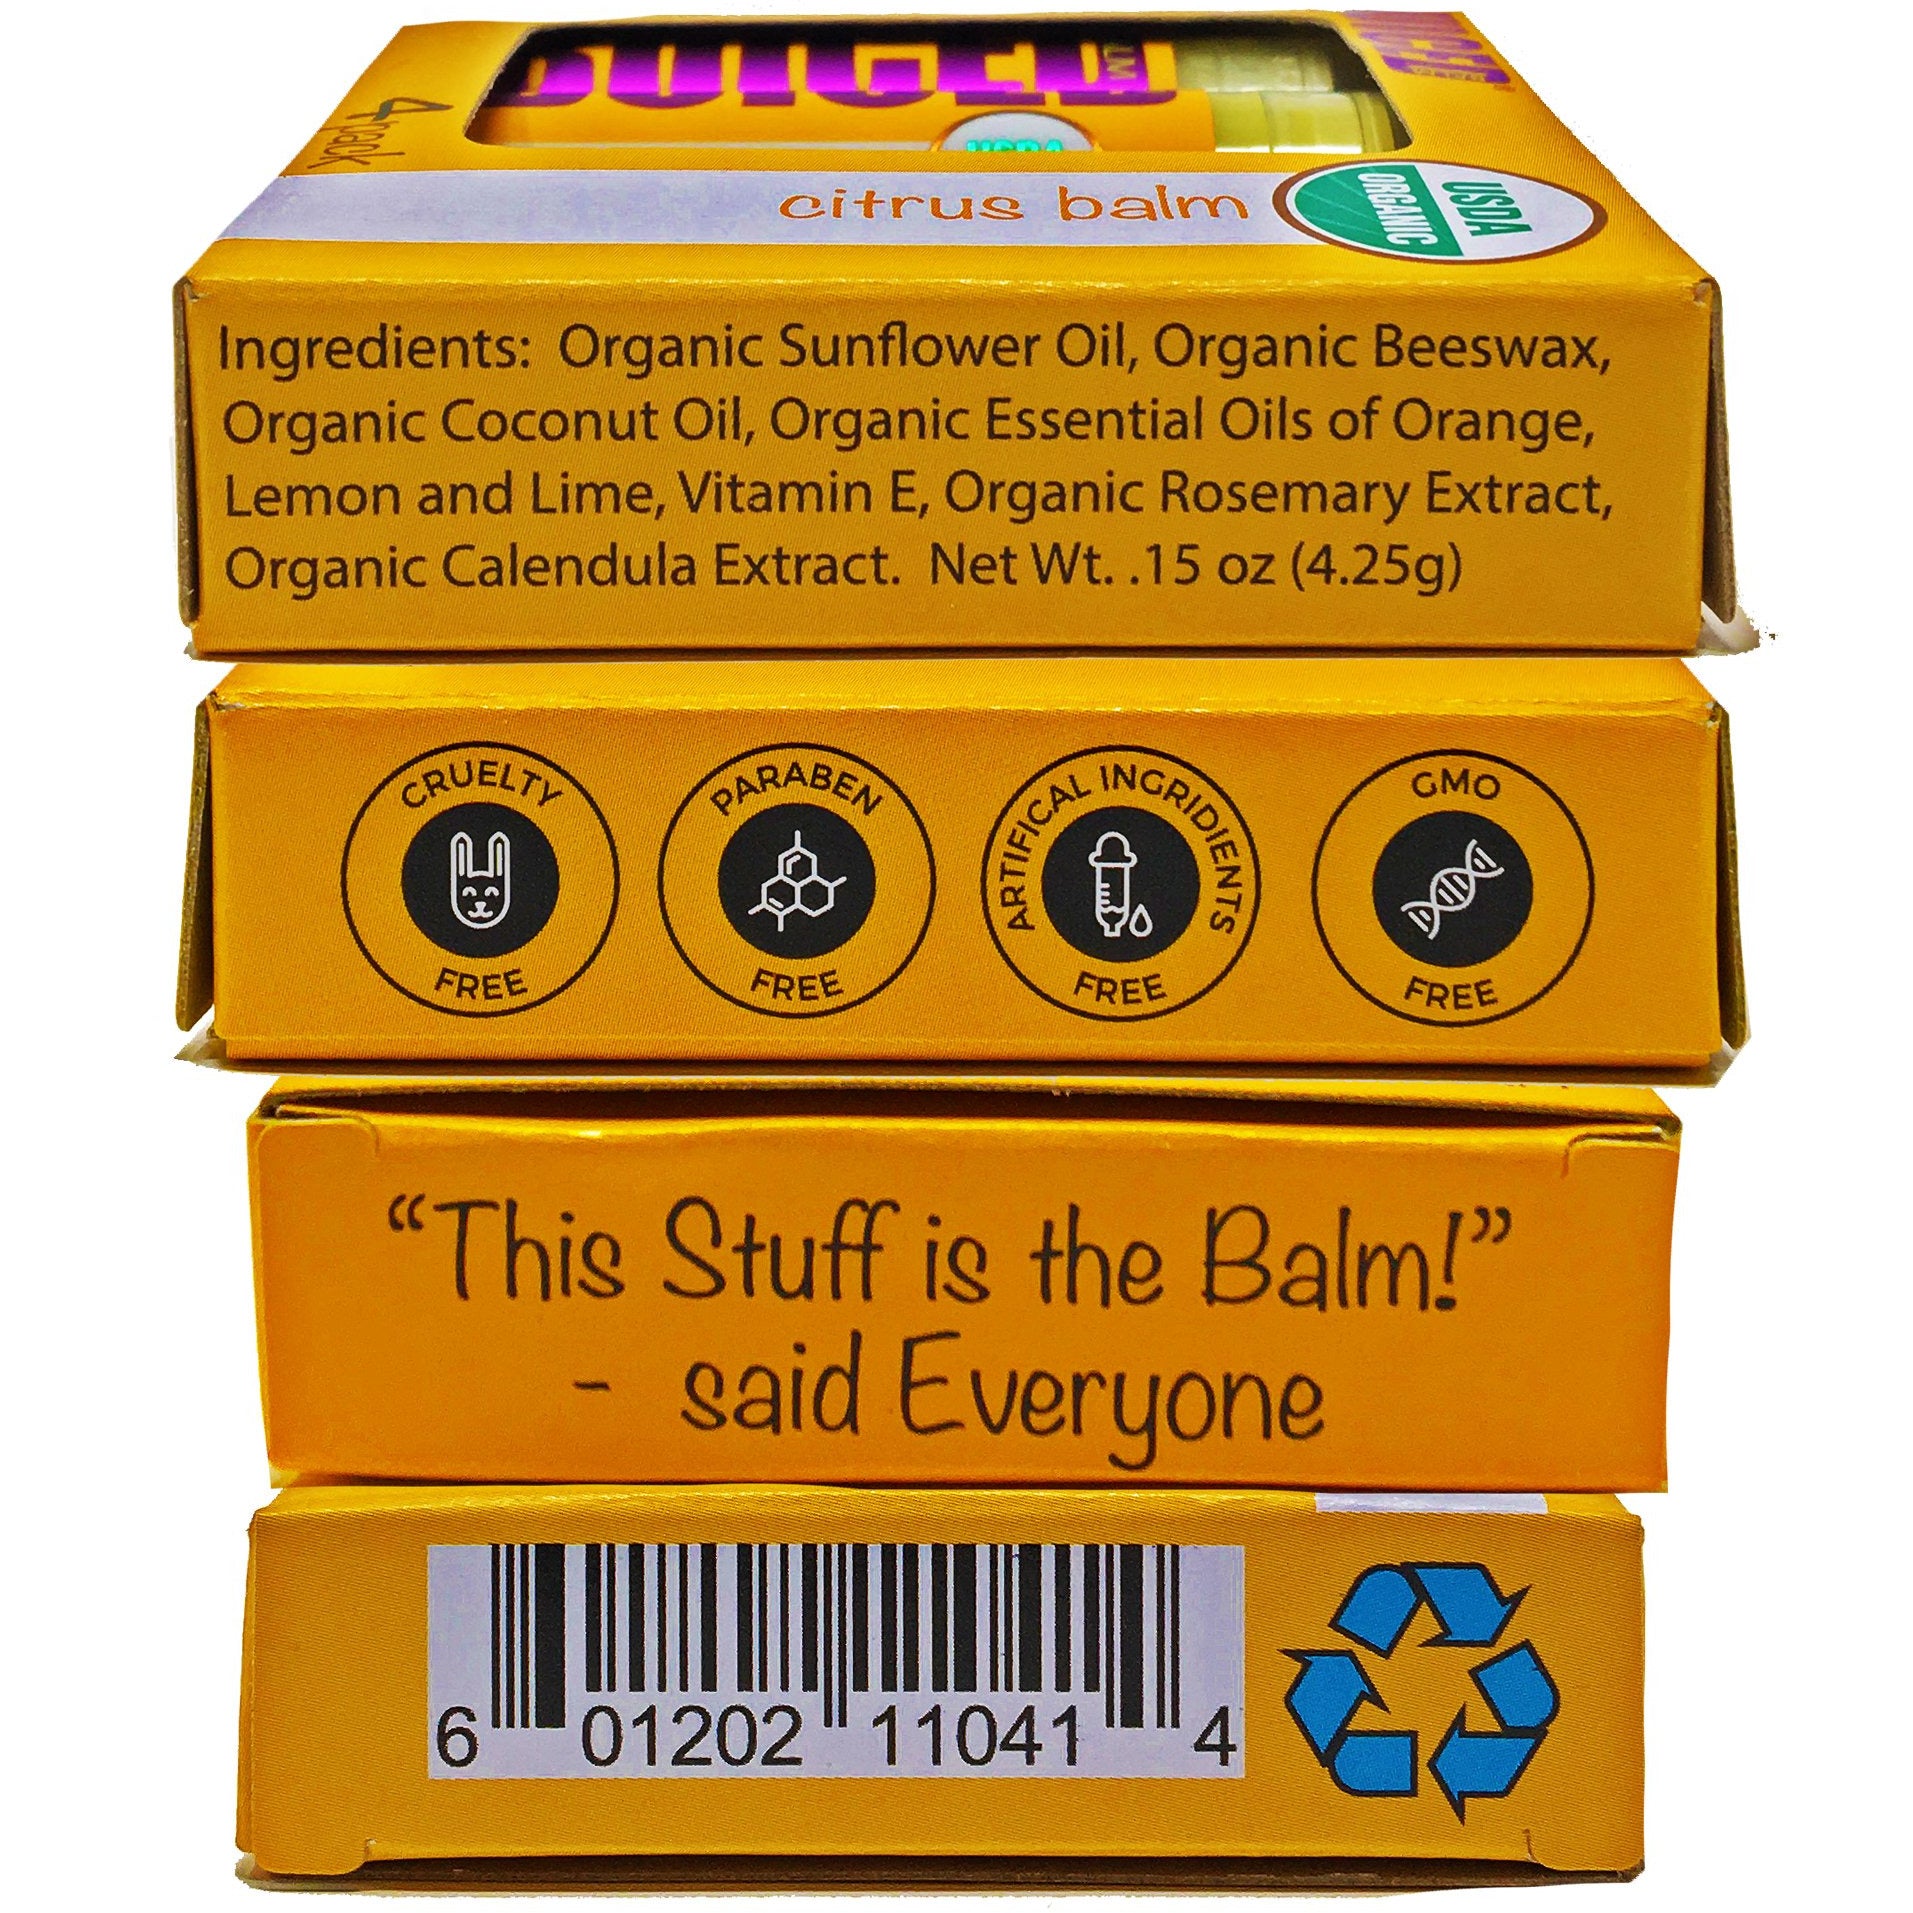 USDA Certified Organic - Citrus 4pack - Buiced Liquid Multivitamin | Gluten Free Vitamins | GMO Free Vitamins | Made in USA Vitamins | Best Multivitamin 